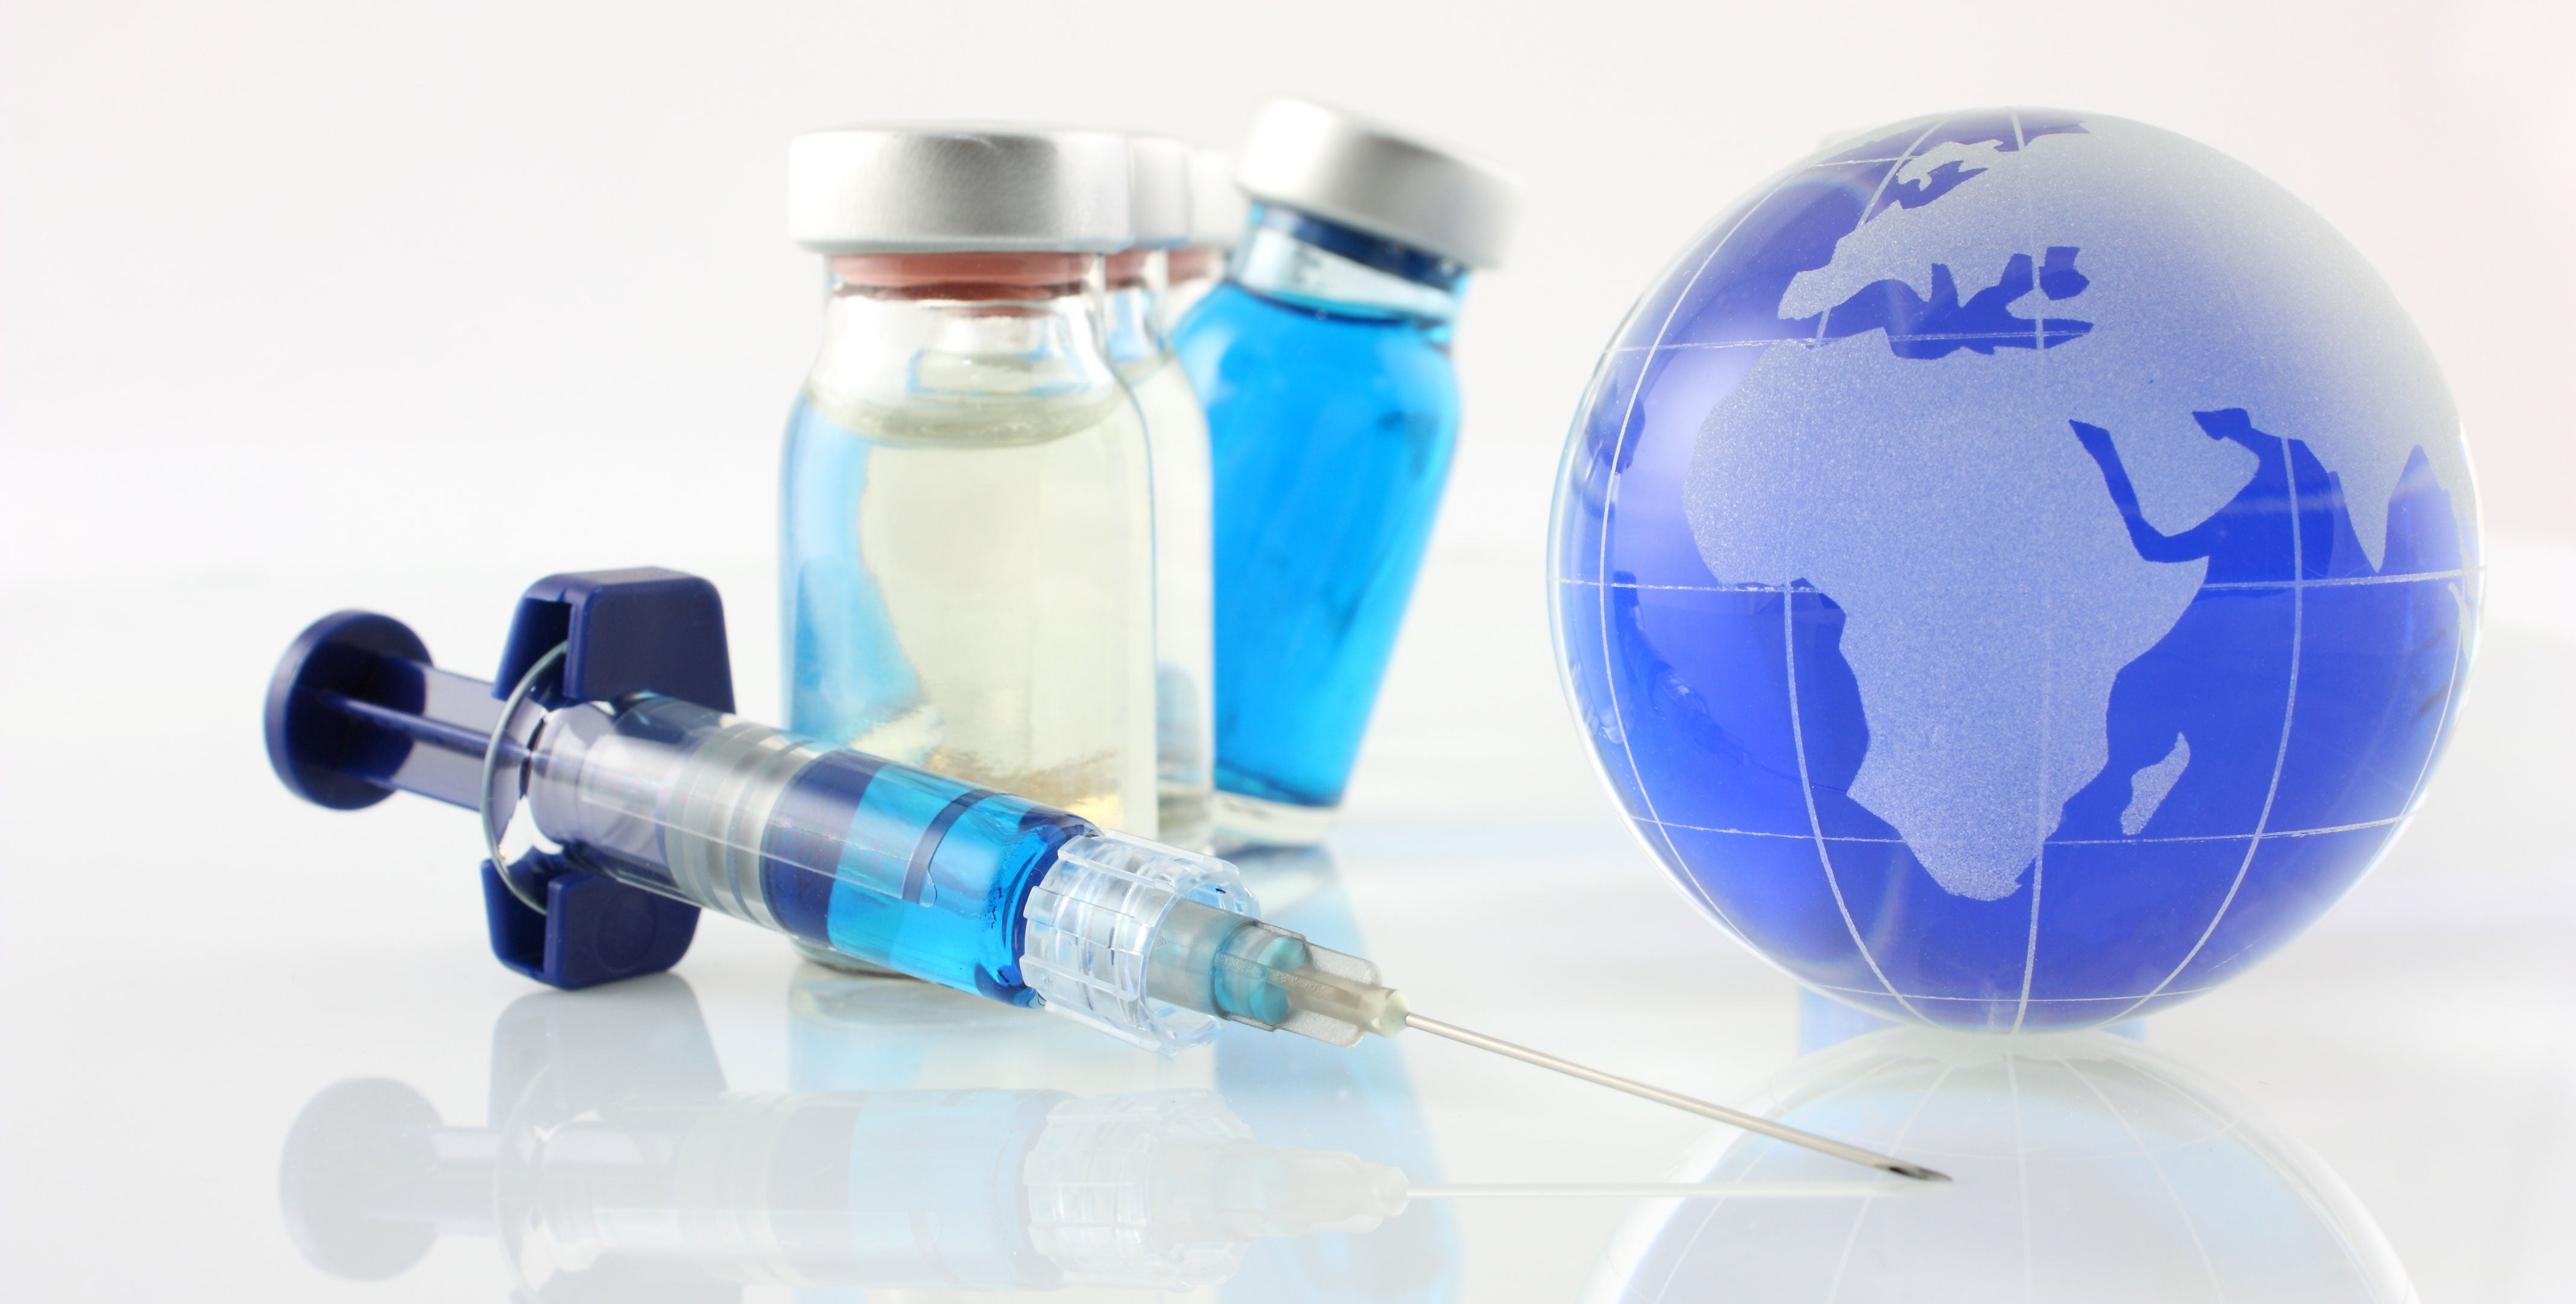 A needle, three vials of medicine and a small blue globe